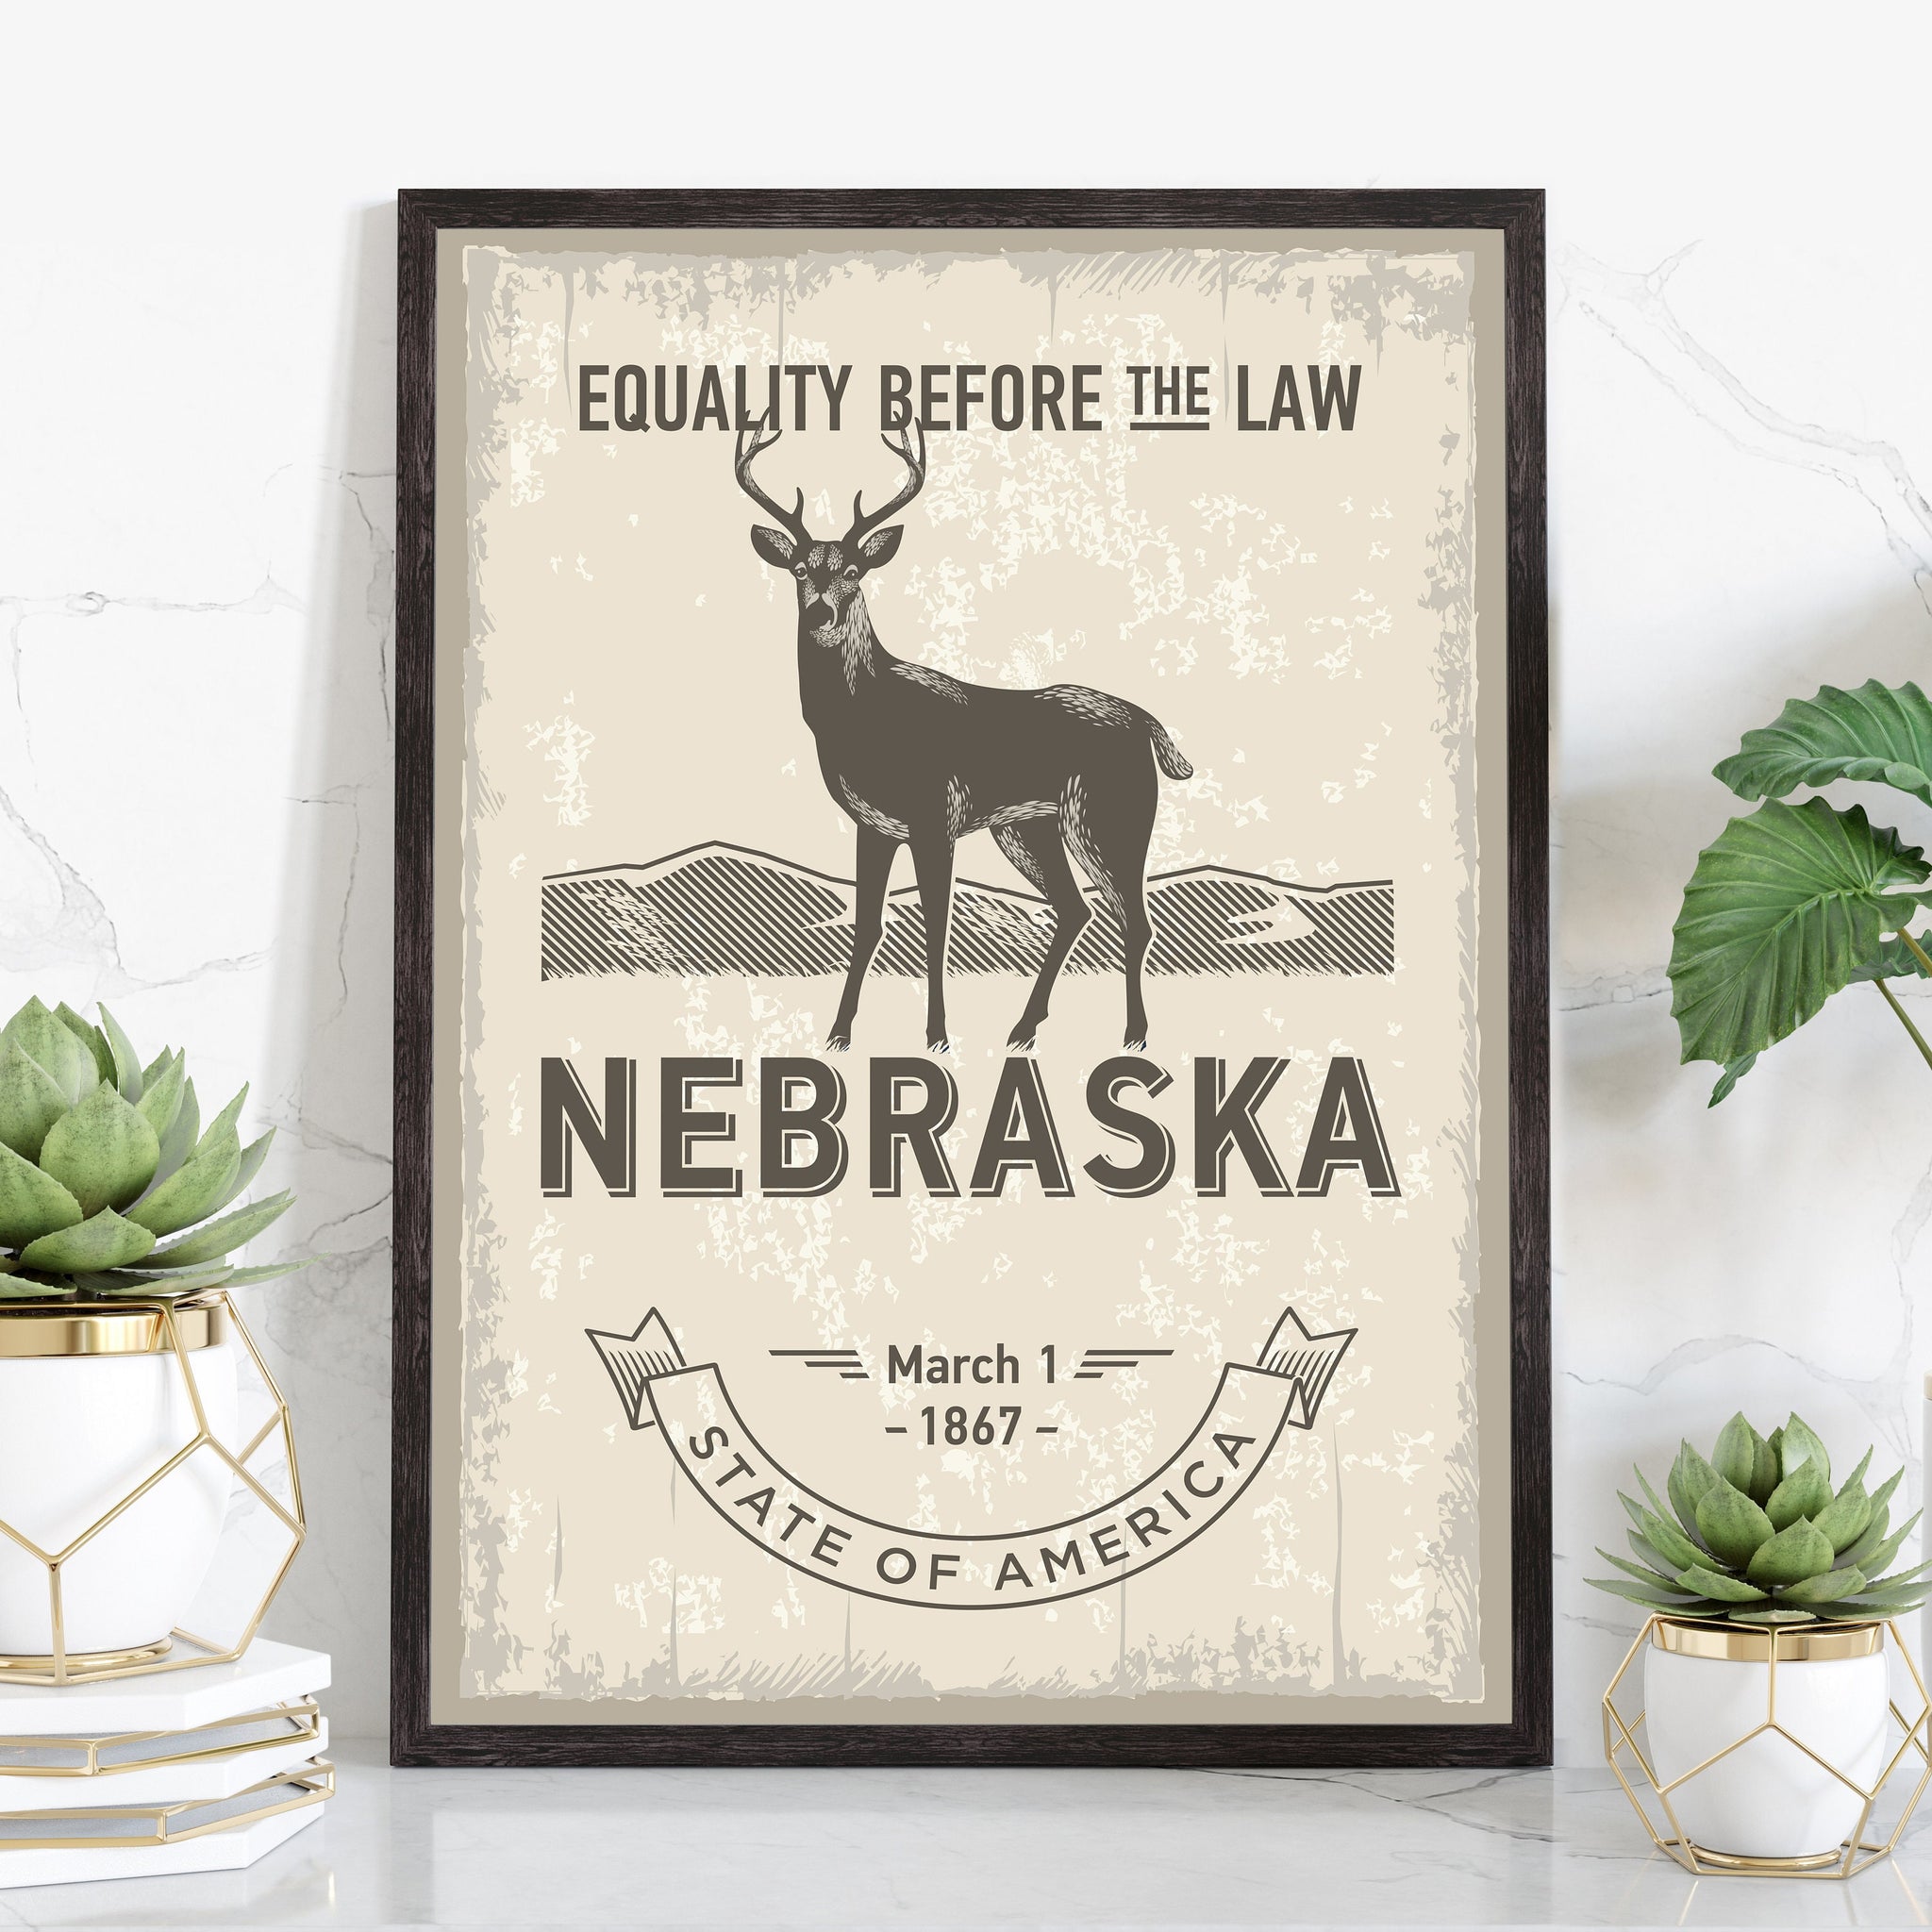 Nebraska State Symbol Poster, Nebraska State Poster Print, Nebraska State Emblem Poster, Retro Travel State Poster, Home and Office Wall Art